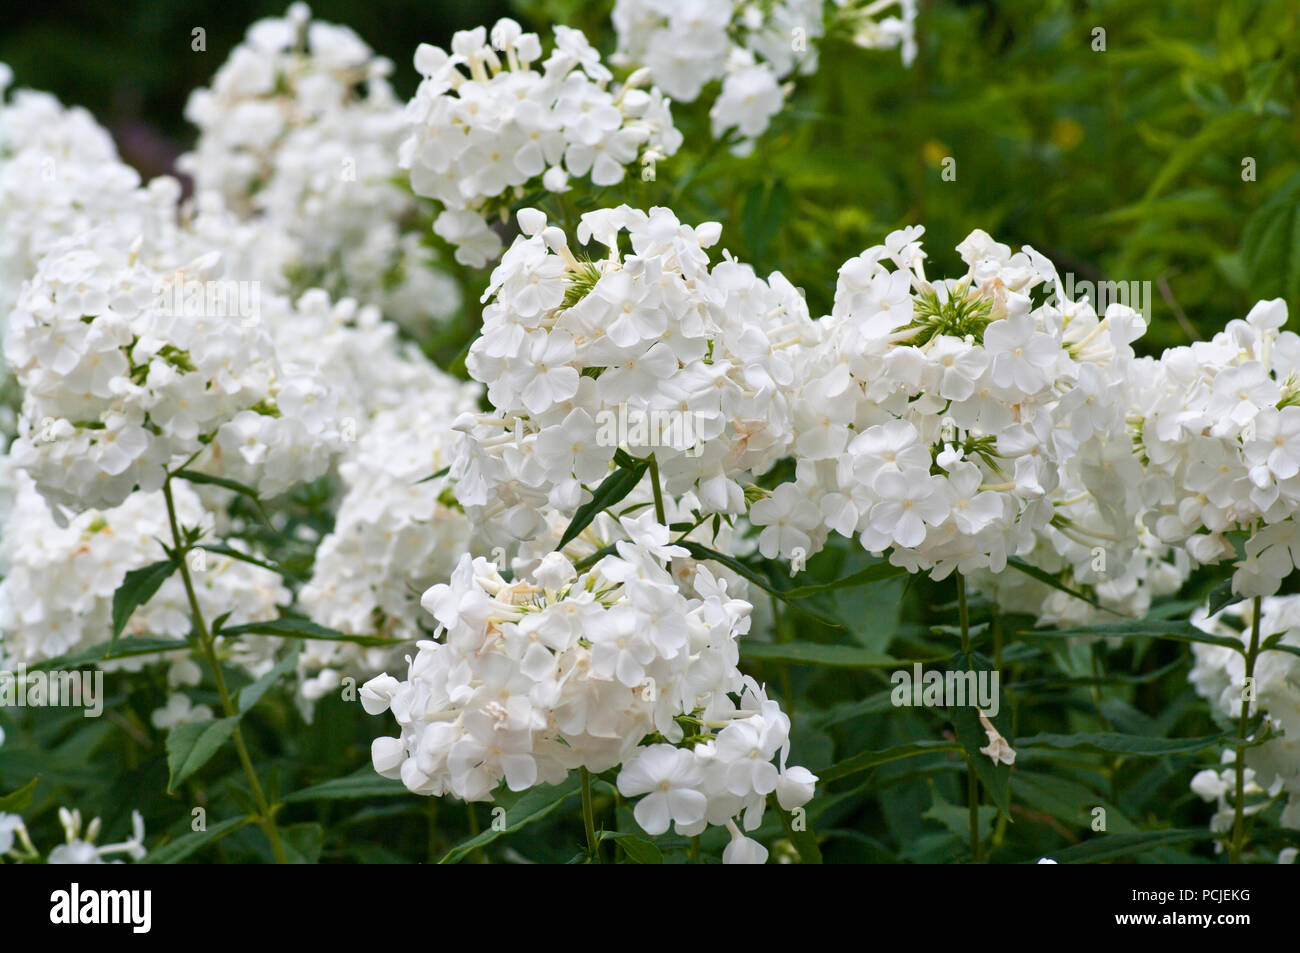 White Perennial  Phlox Flower Heads Flowers Stock Photo